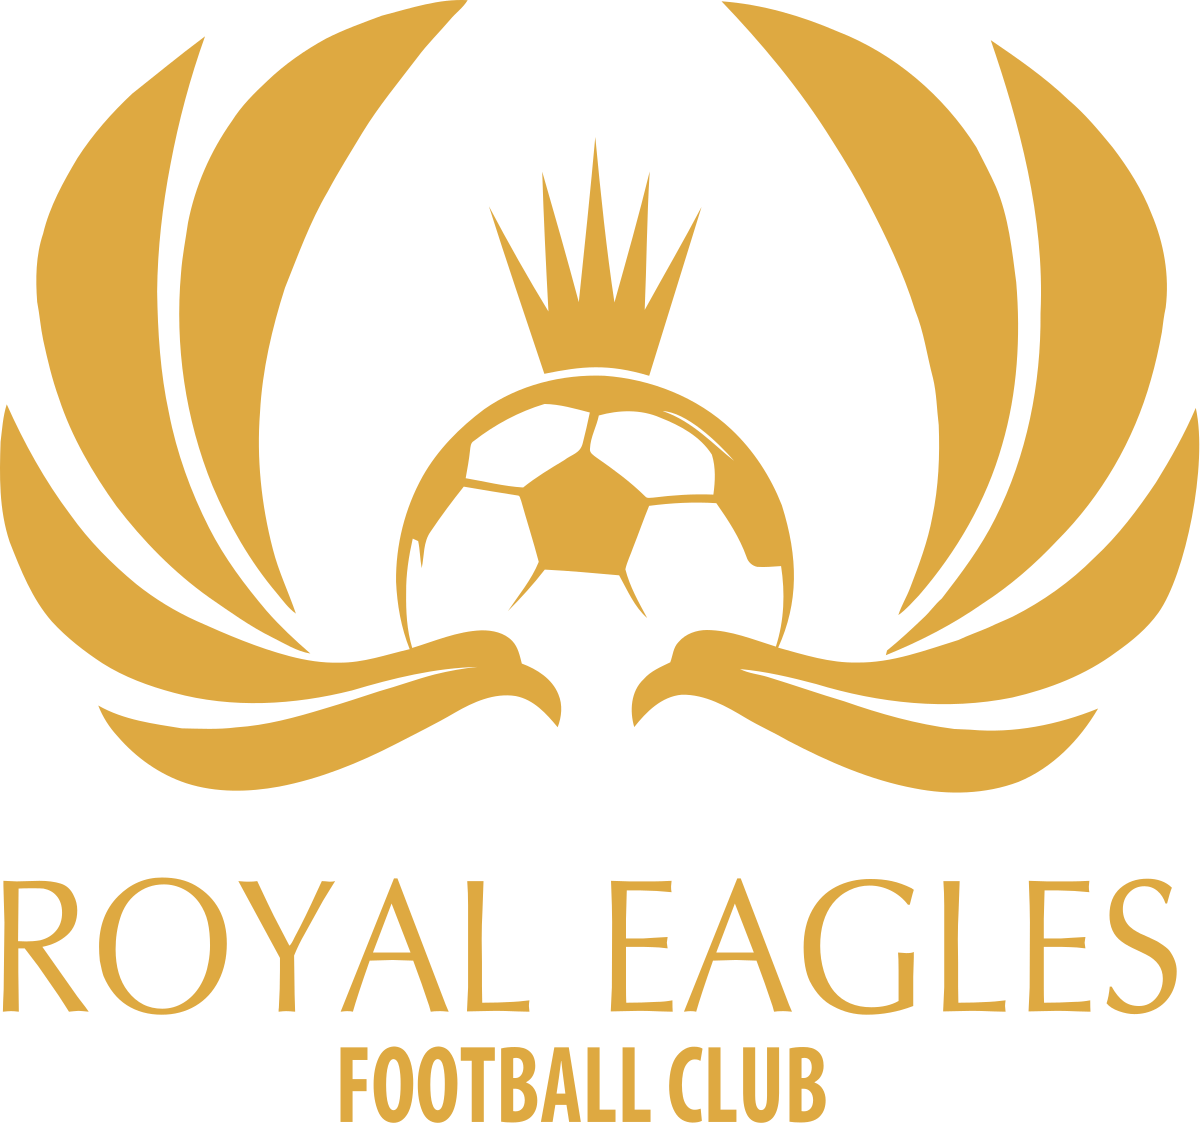 Royal Eagles Football Club (1200x1123), Png Download